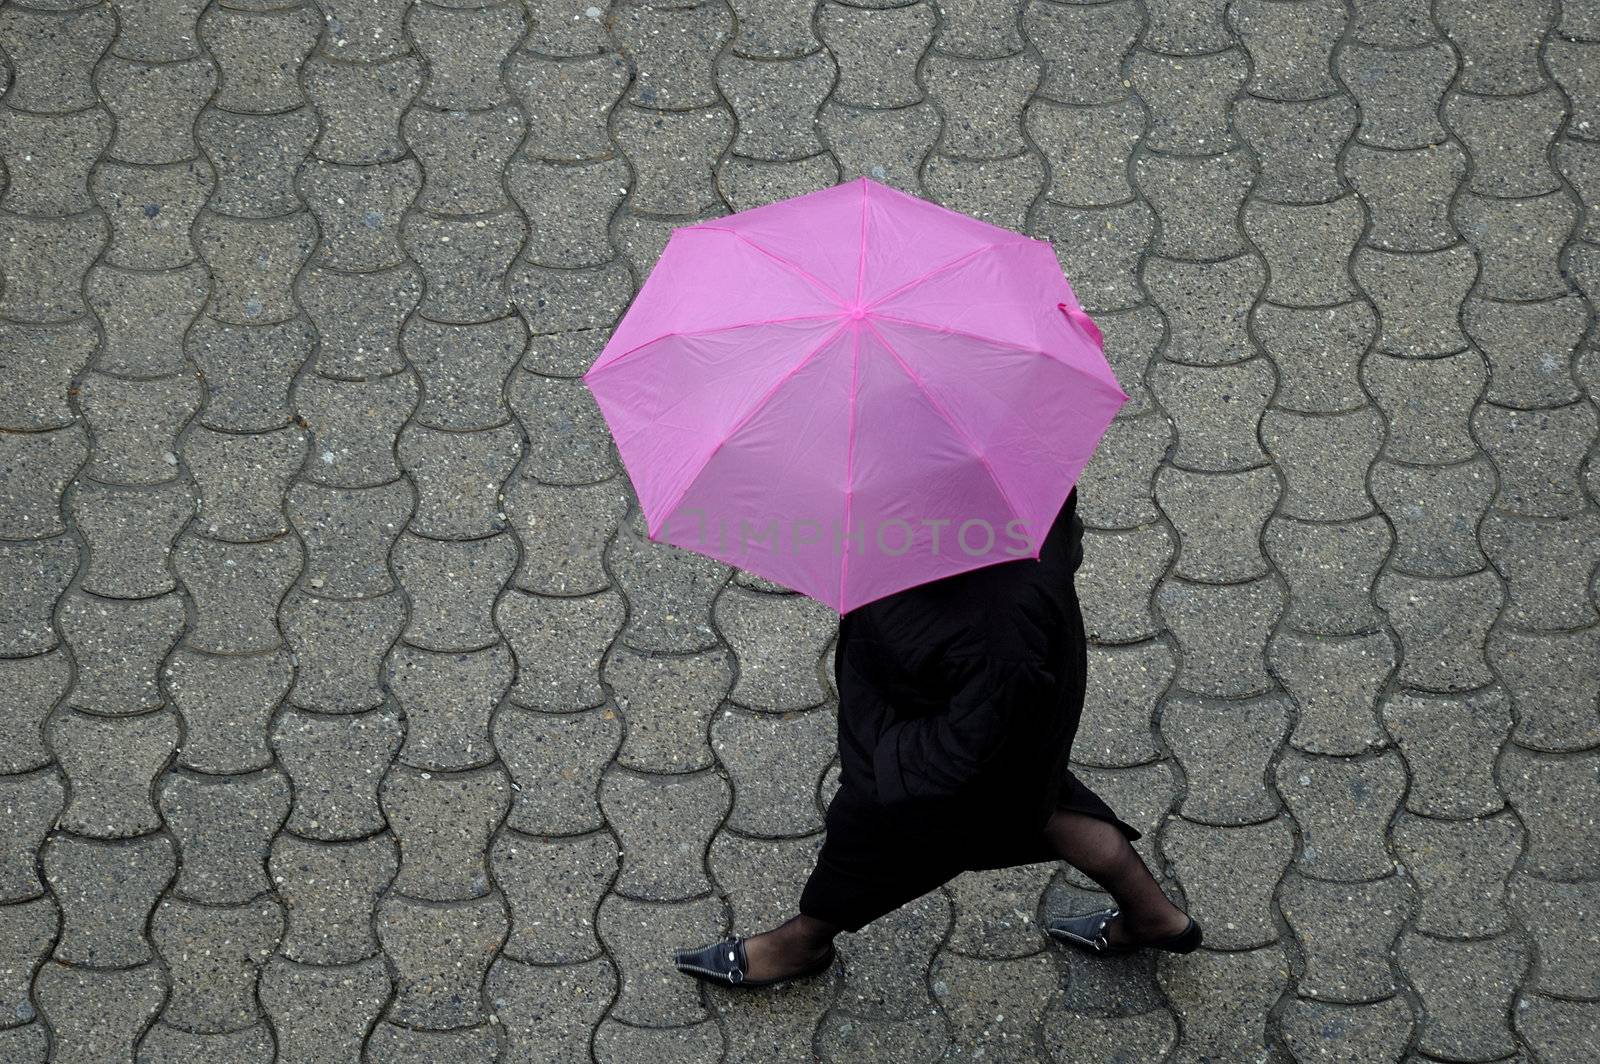 The Pink Umbrella by Bateleur